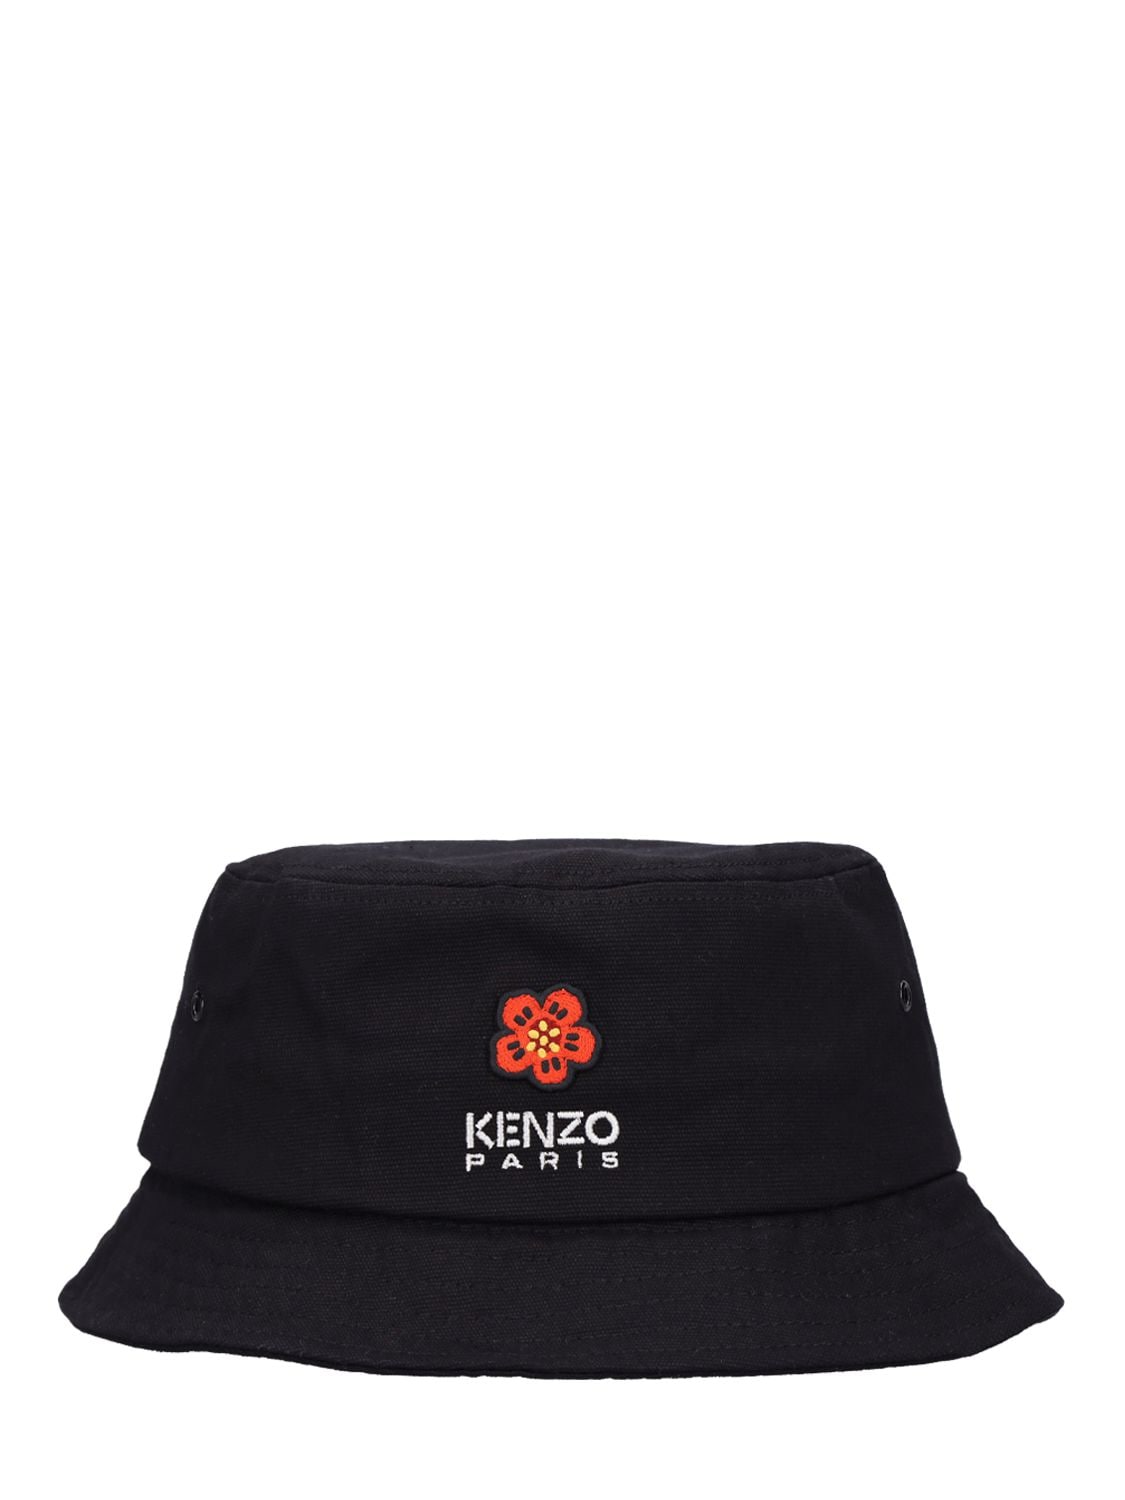 KENZO PARIS Poppy Flower Printed Tech Bucket Hat | Smart Closet